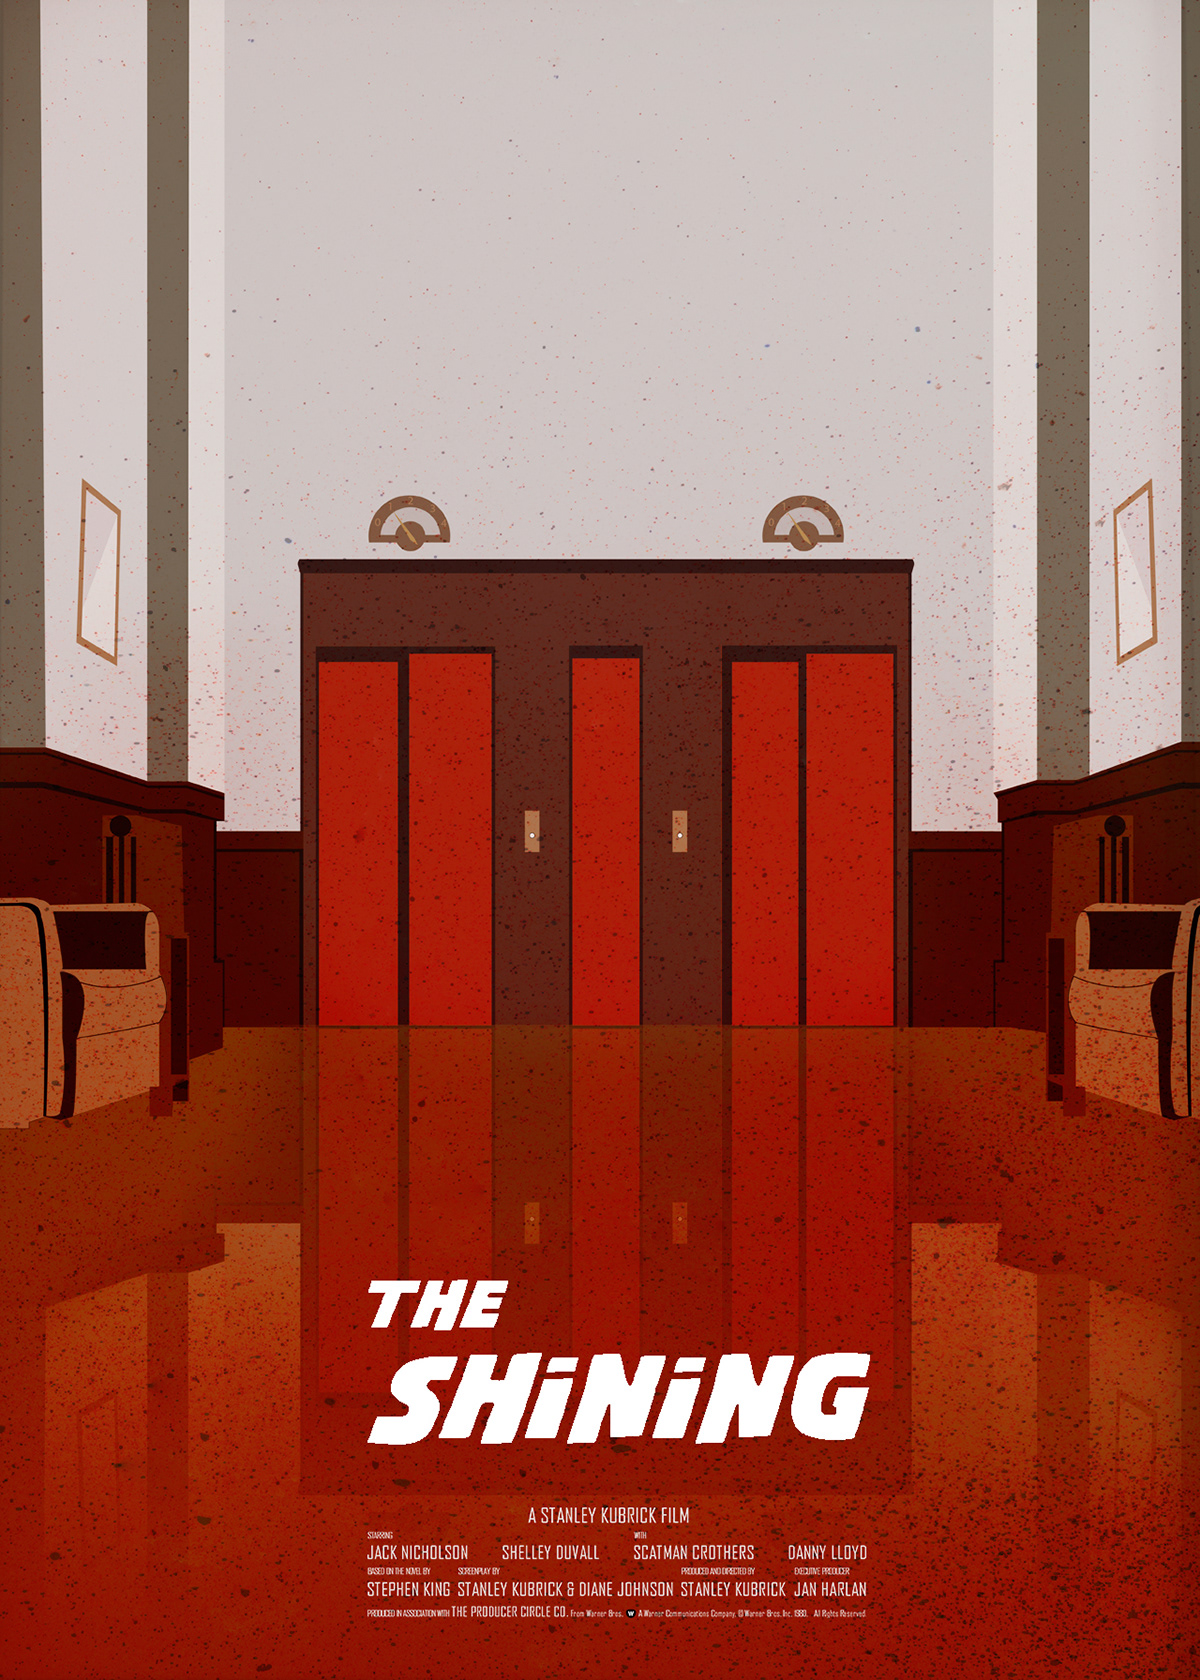 "THE SHINING". 